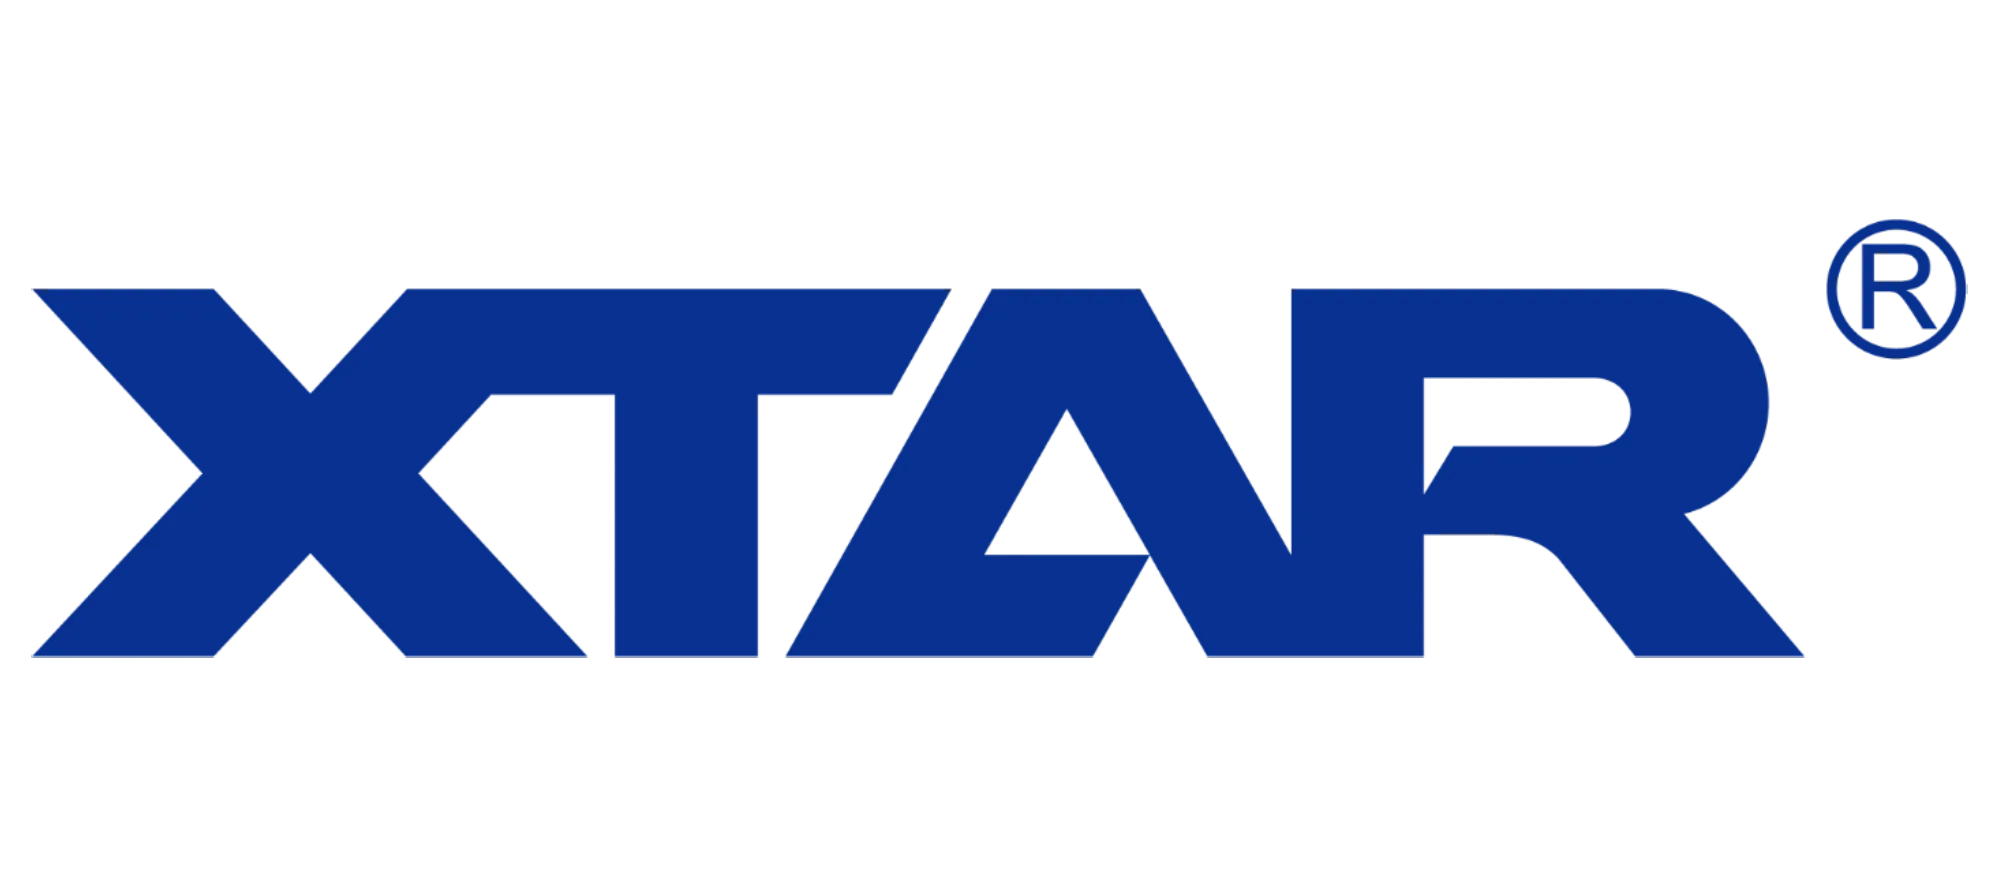 XTAR Technology